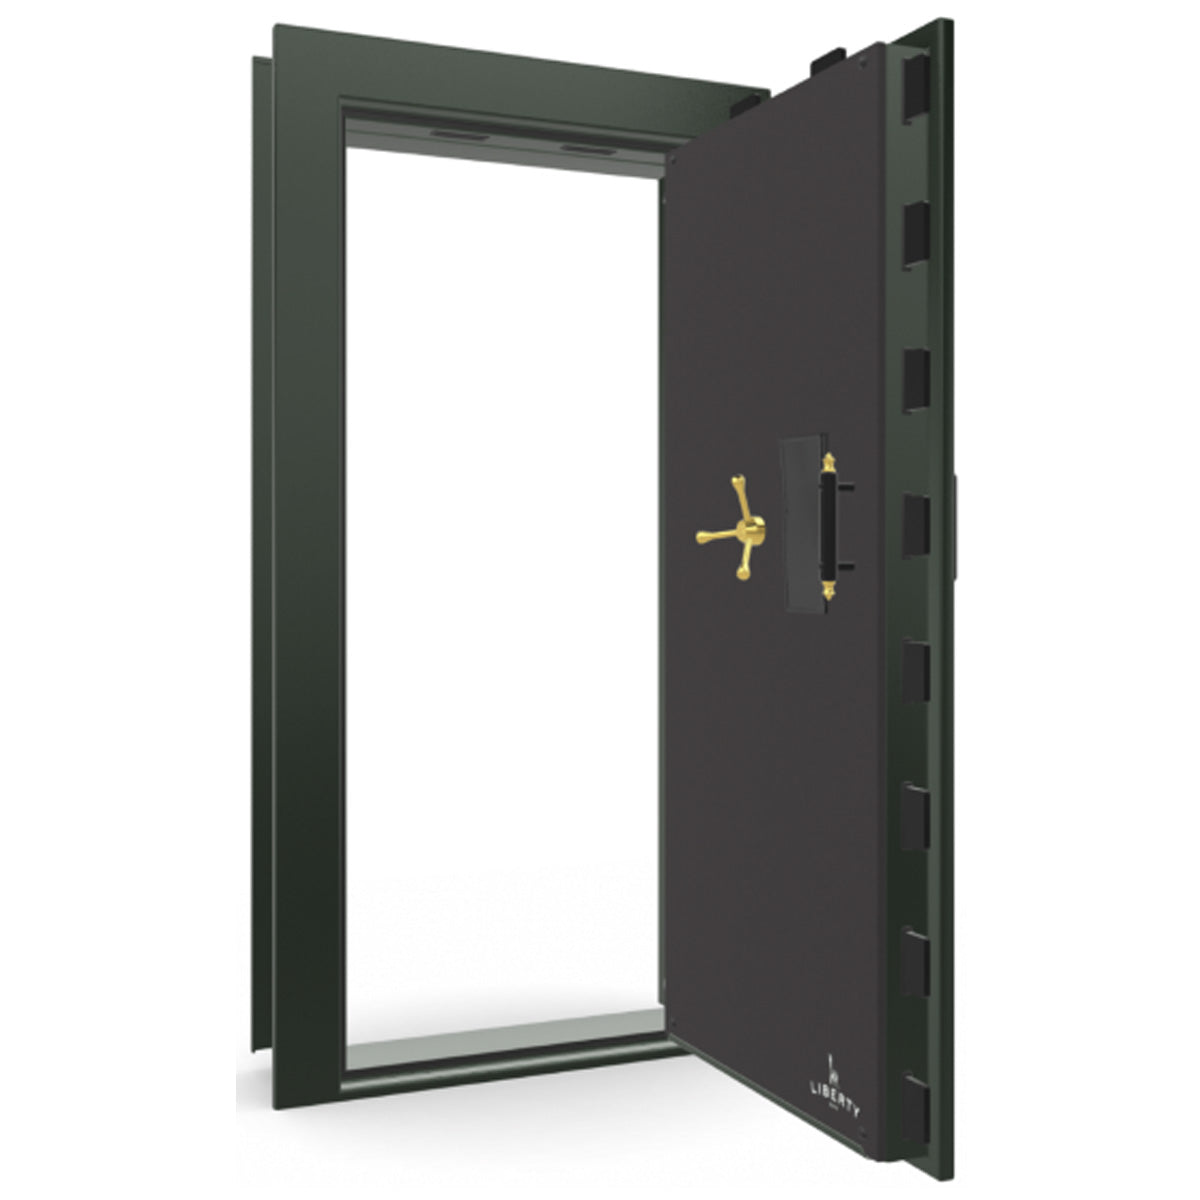 The Beast Vault Door in Green Gloss with Brass Electronic Lock, Right Outswing, door open.